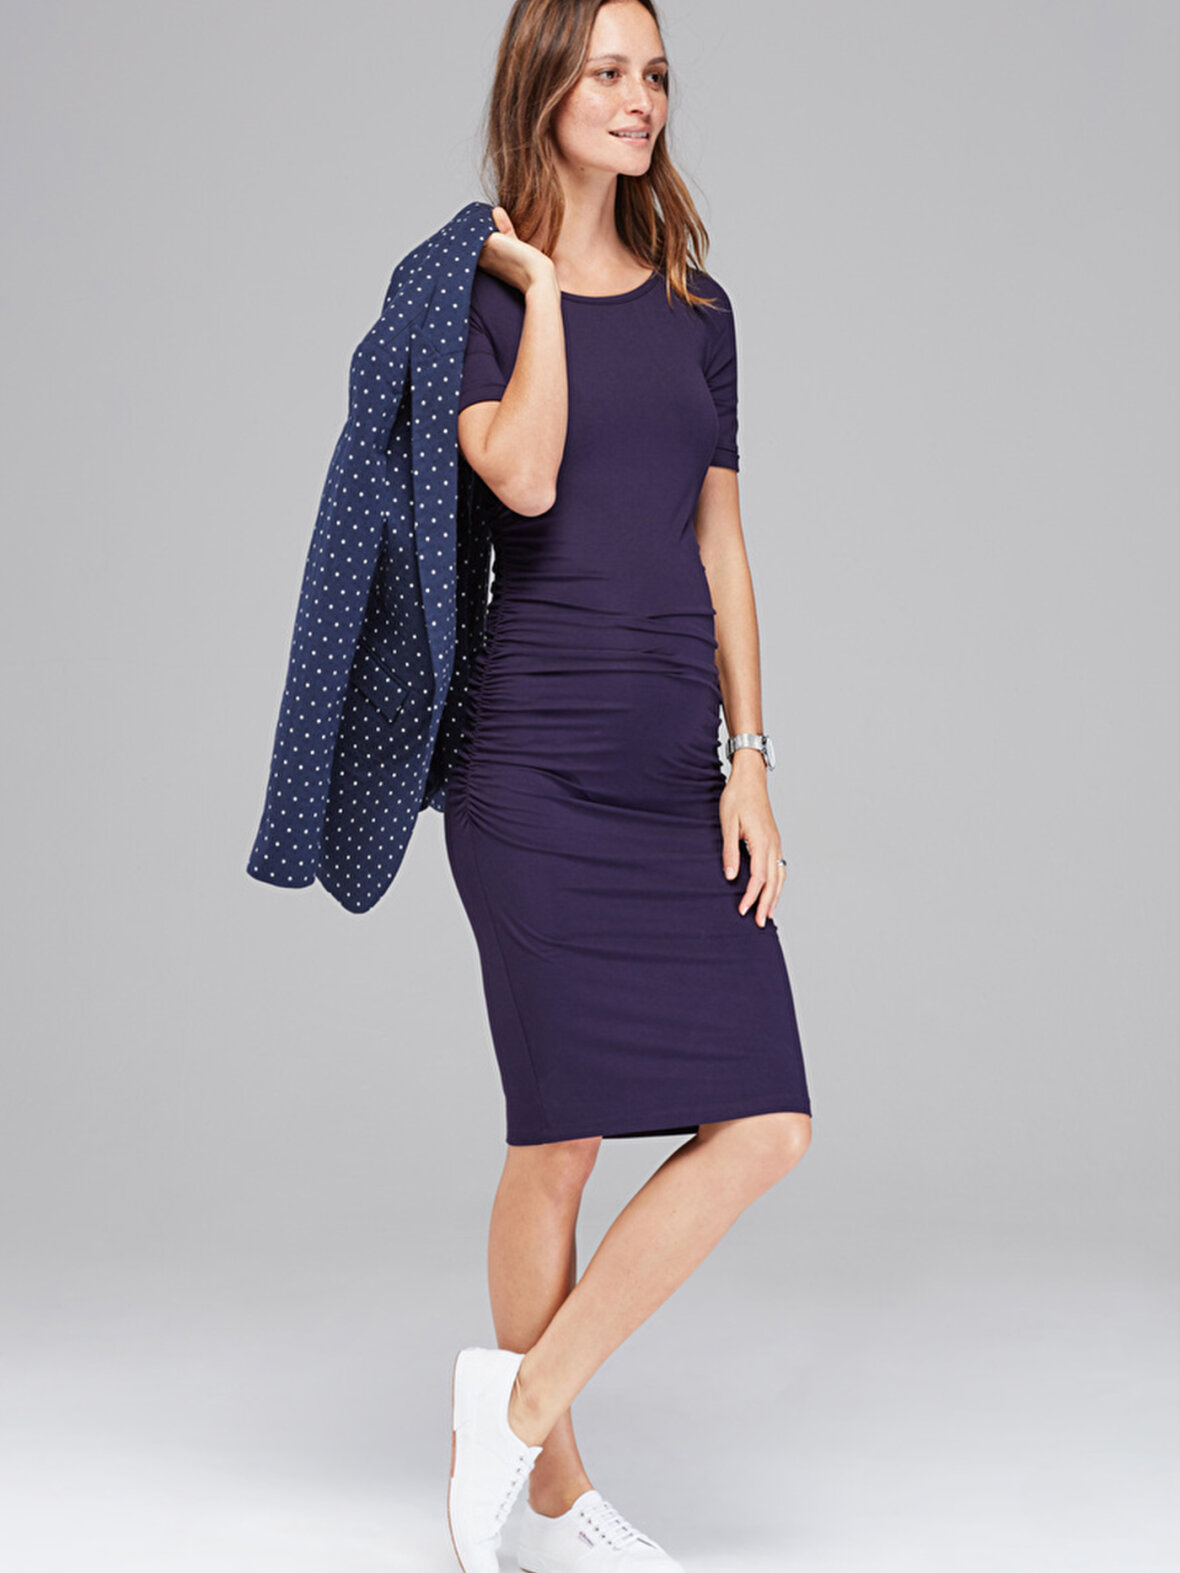 Enula9 - Workwear - Isabella Oliver - Ruched t-shirt kjole